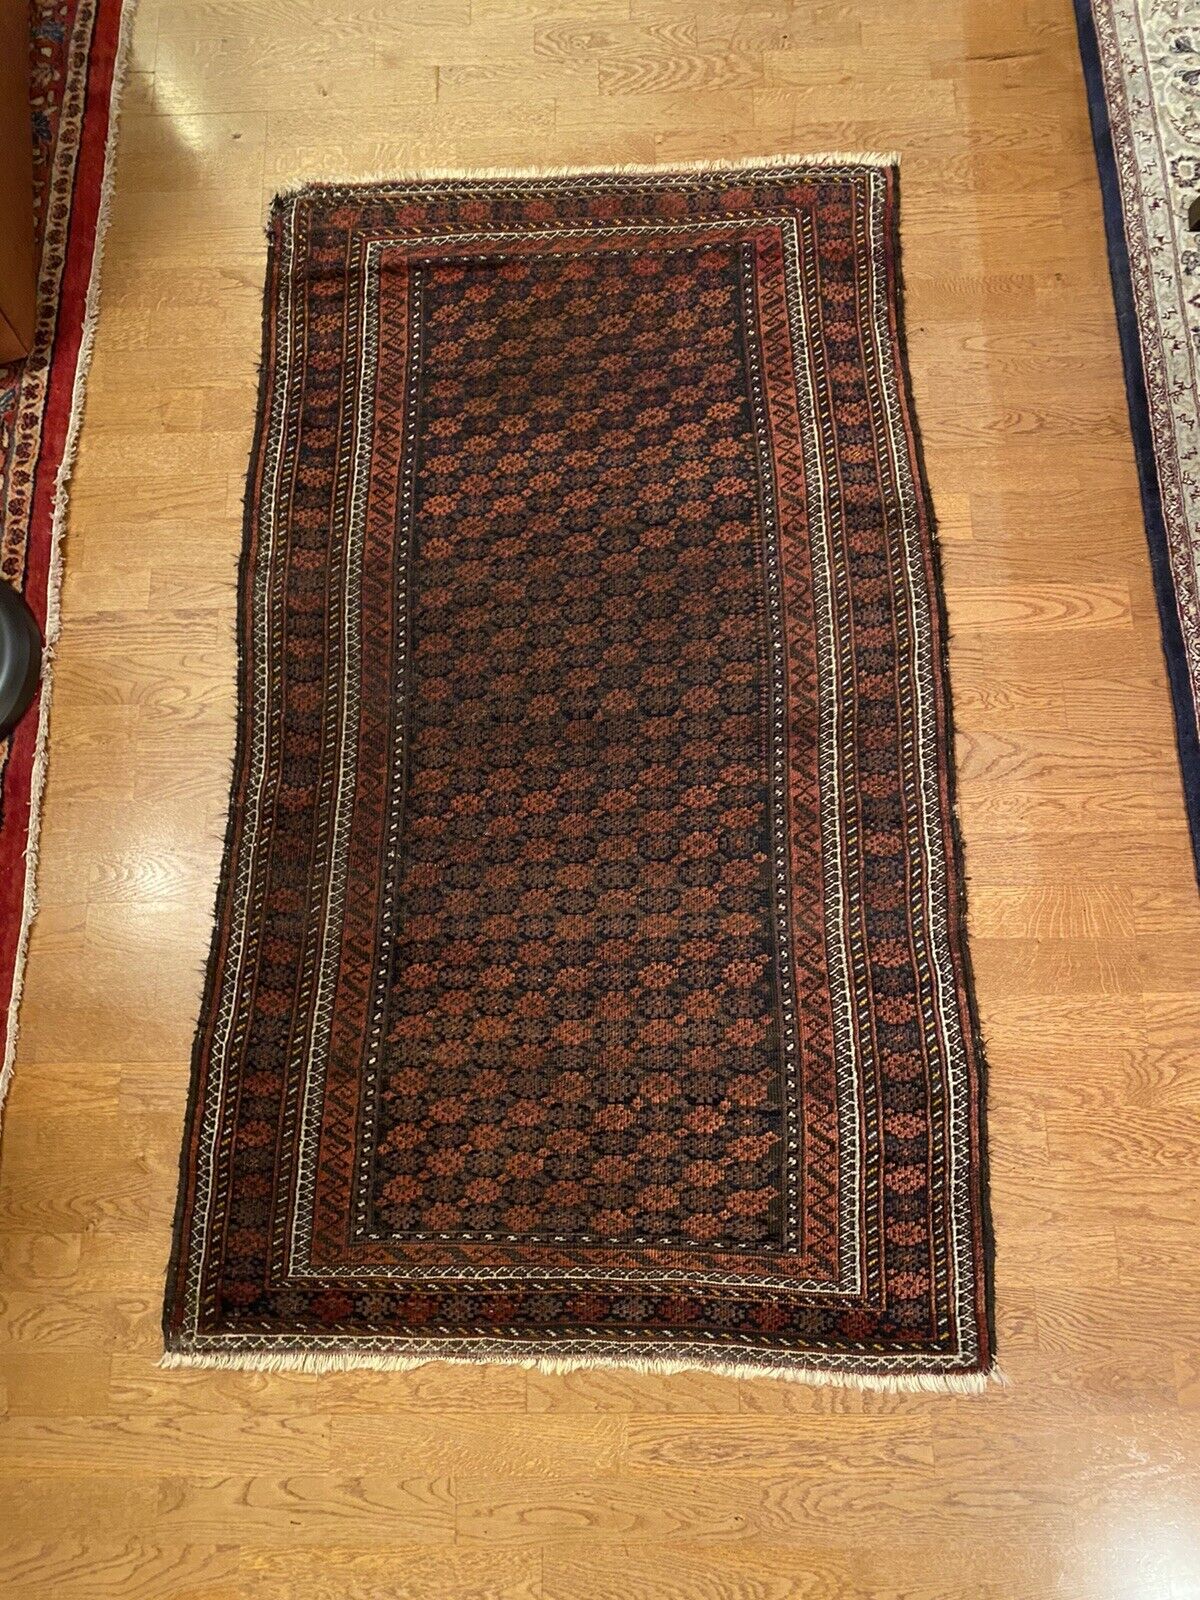 Antique Afghan Baluchii rug, circa 1880, Deep Red, Navy & Umber. Soft, Flexible